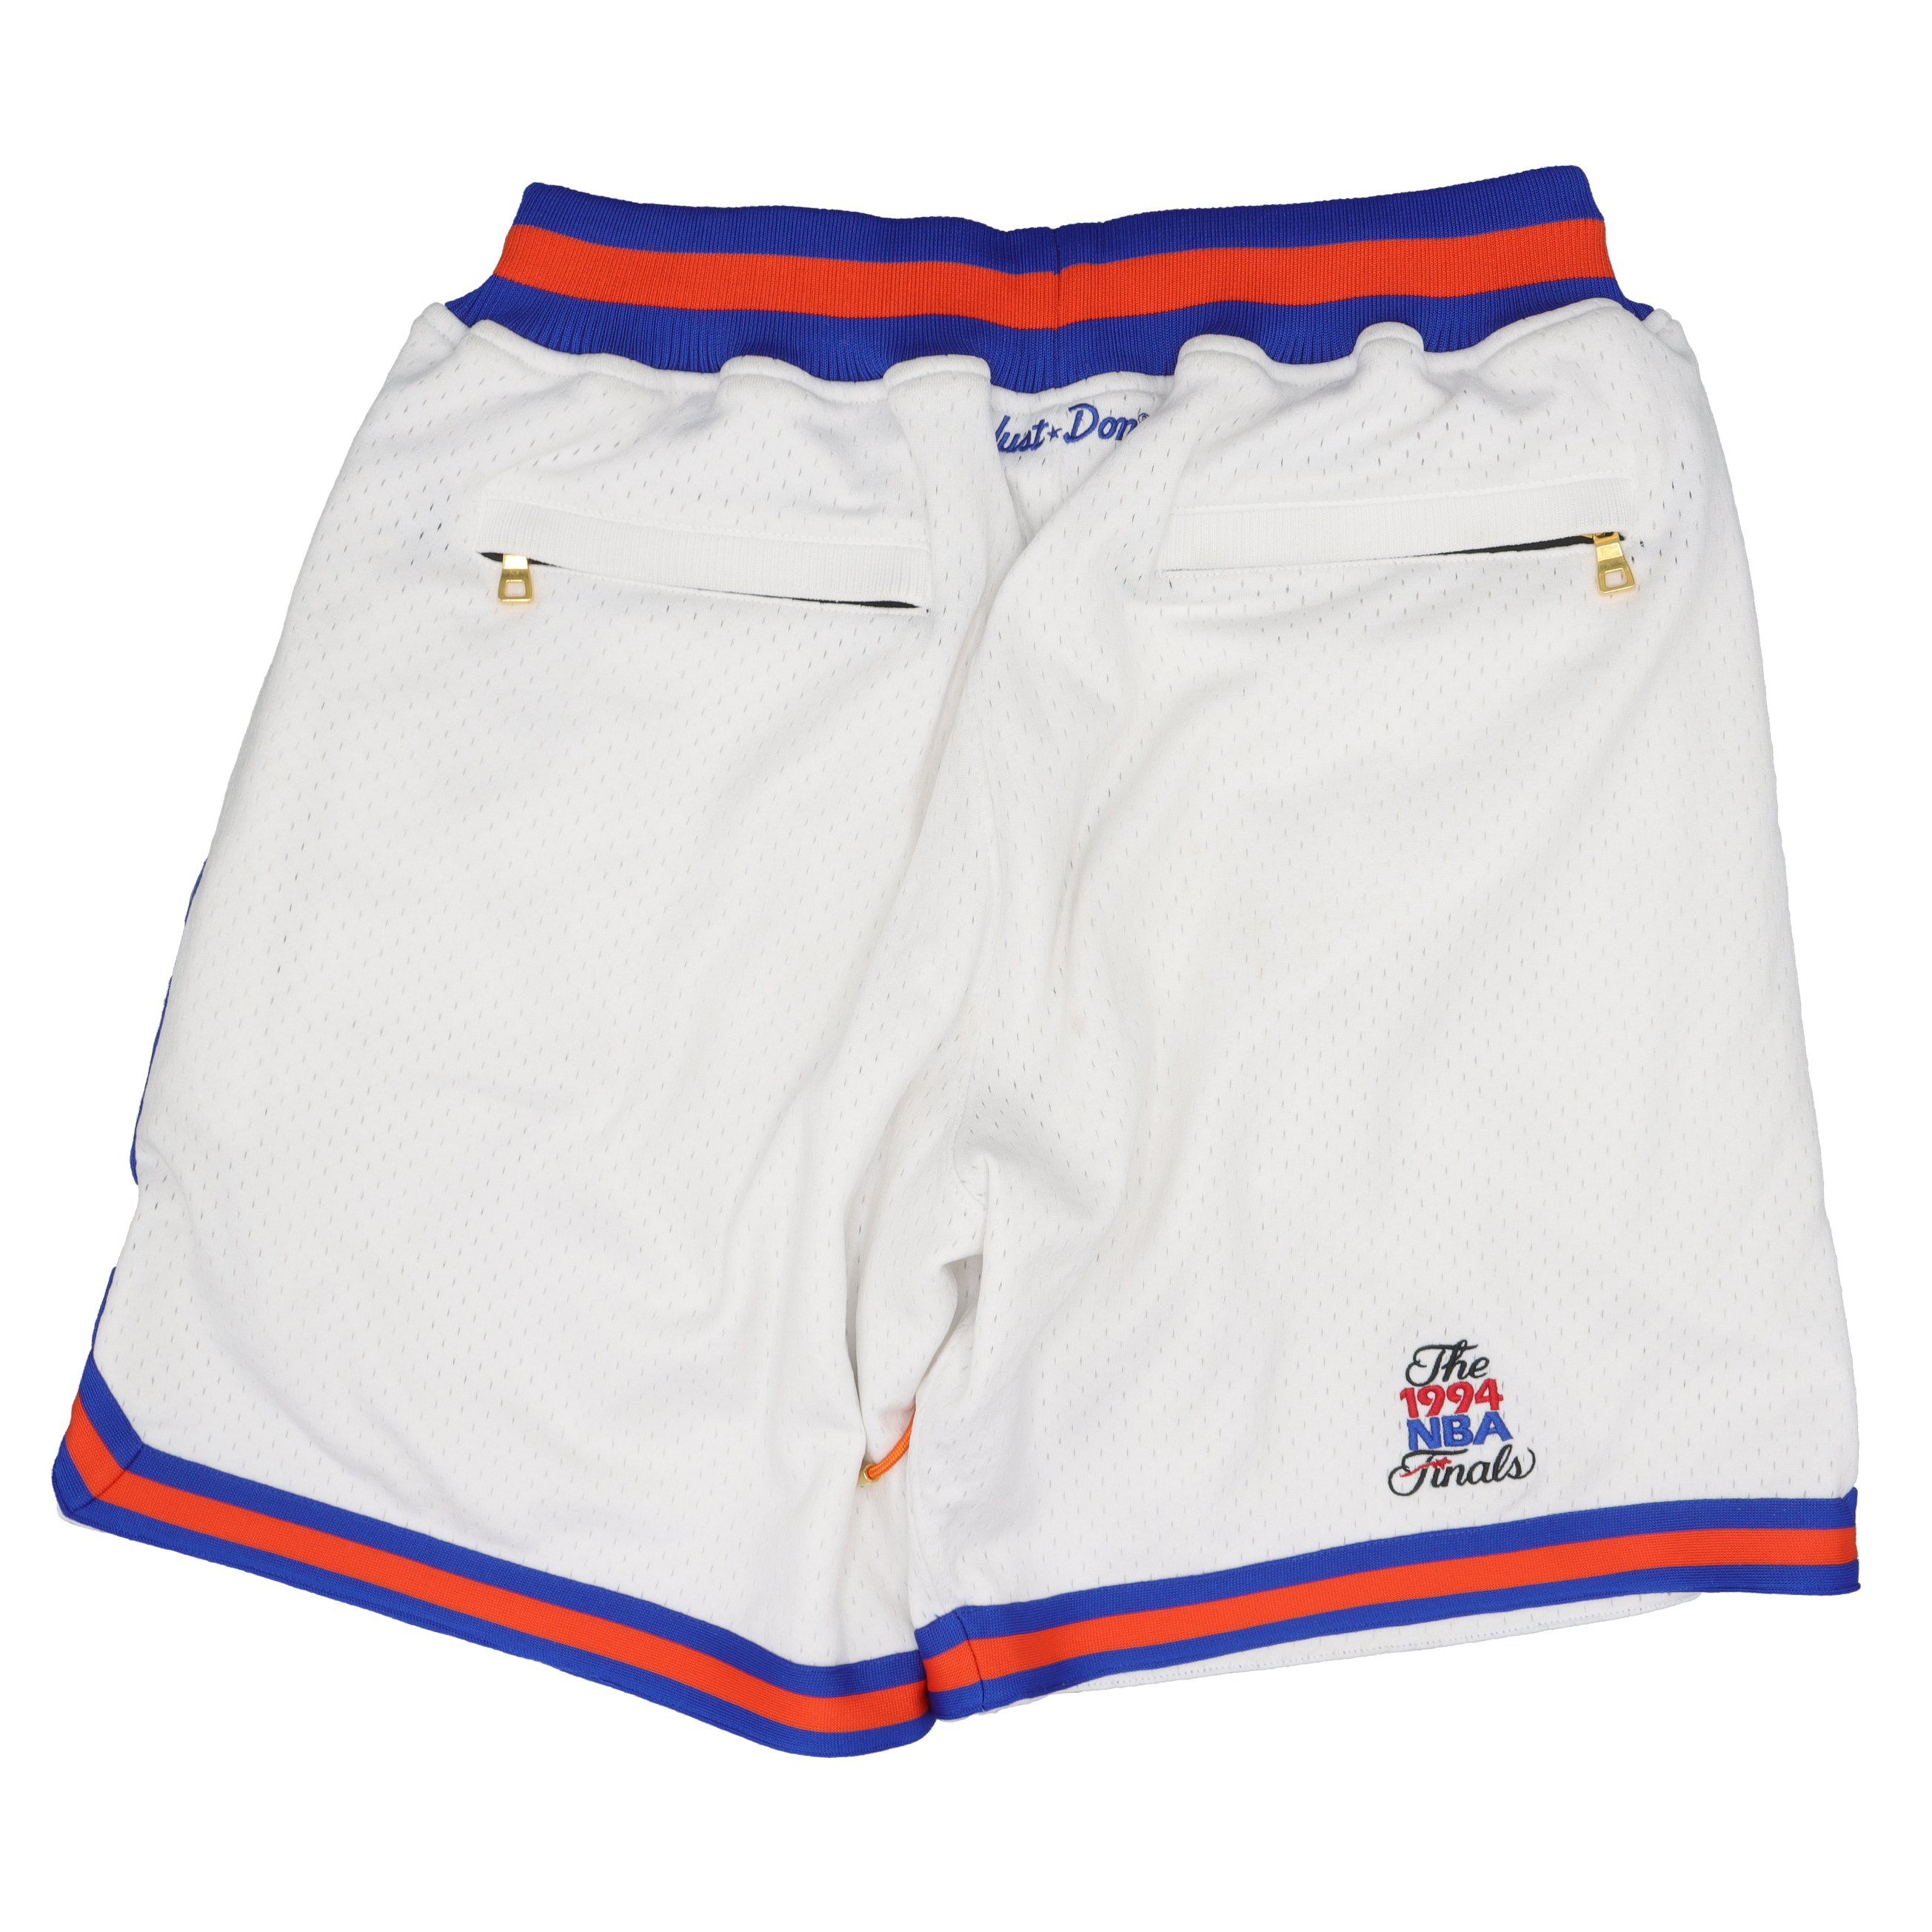 New York Knicks NBA Basketball Shorts, Made by Adidas Trefoil, Size 14  Years, Blue/orange/black -  Denmark